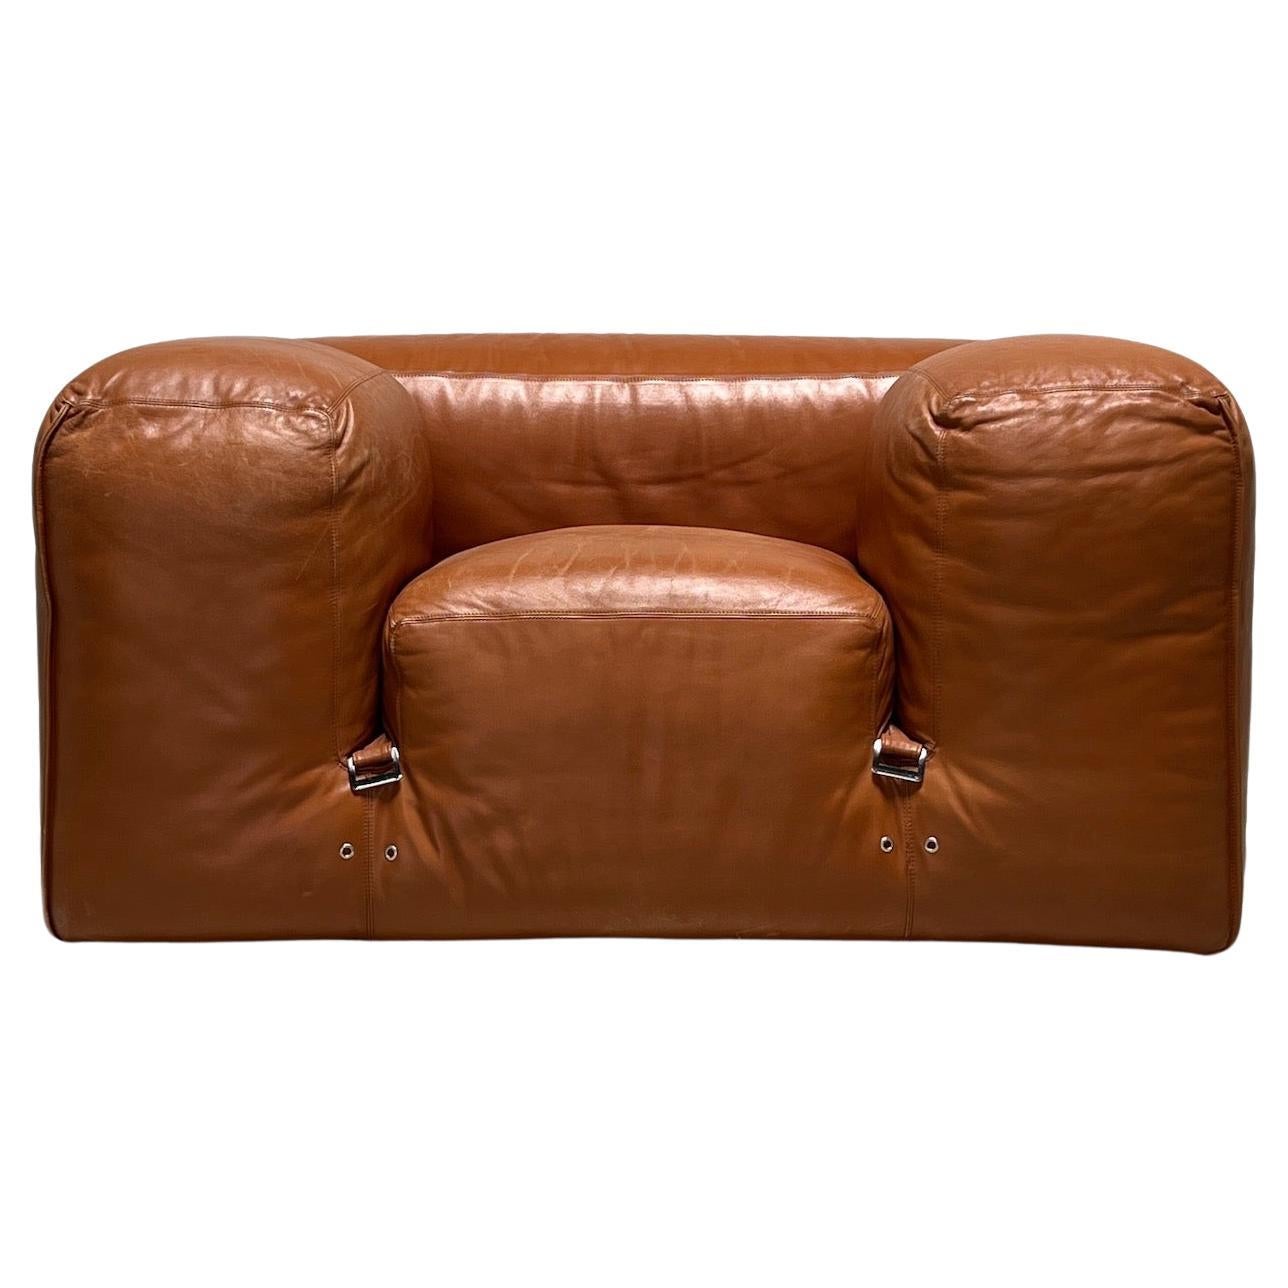 Mario Bellini "Le Mura" Lounge Chair for Cassina